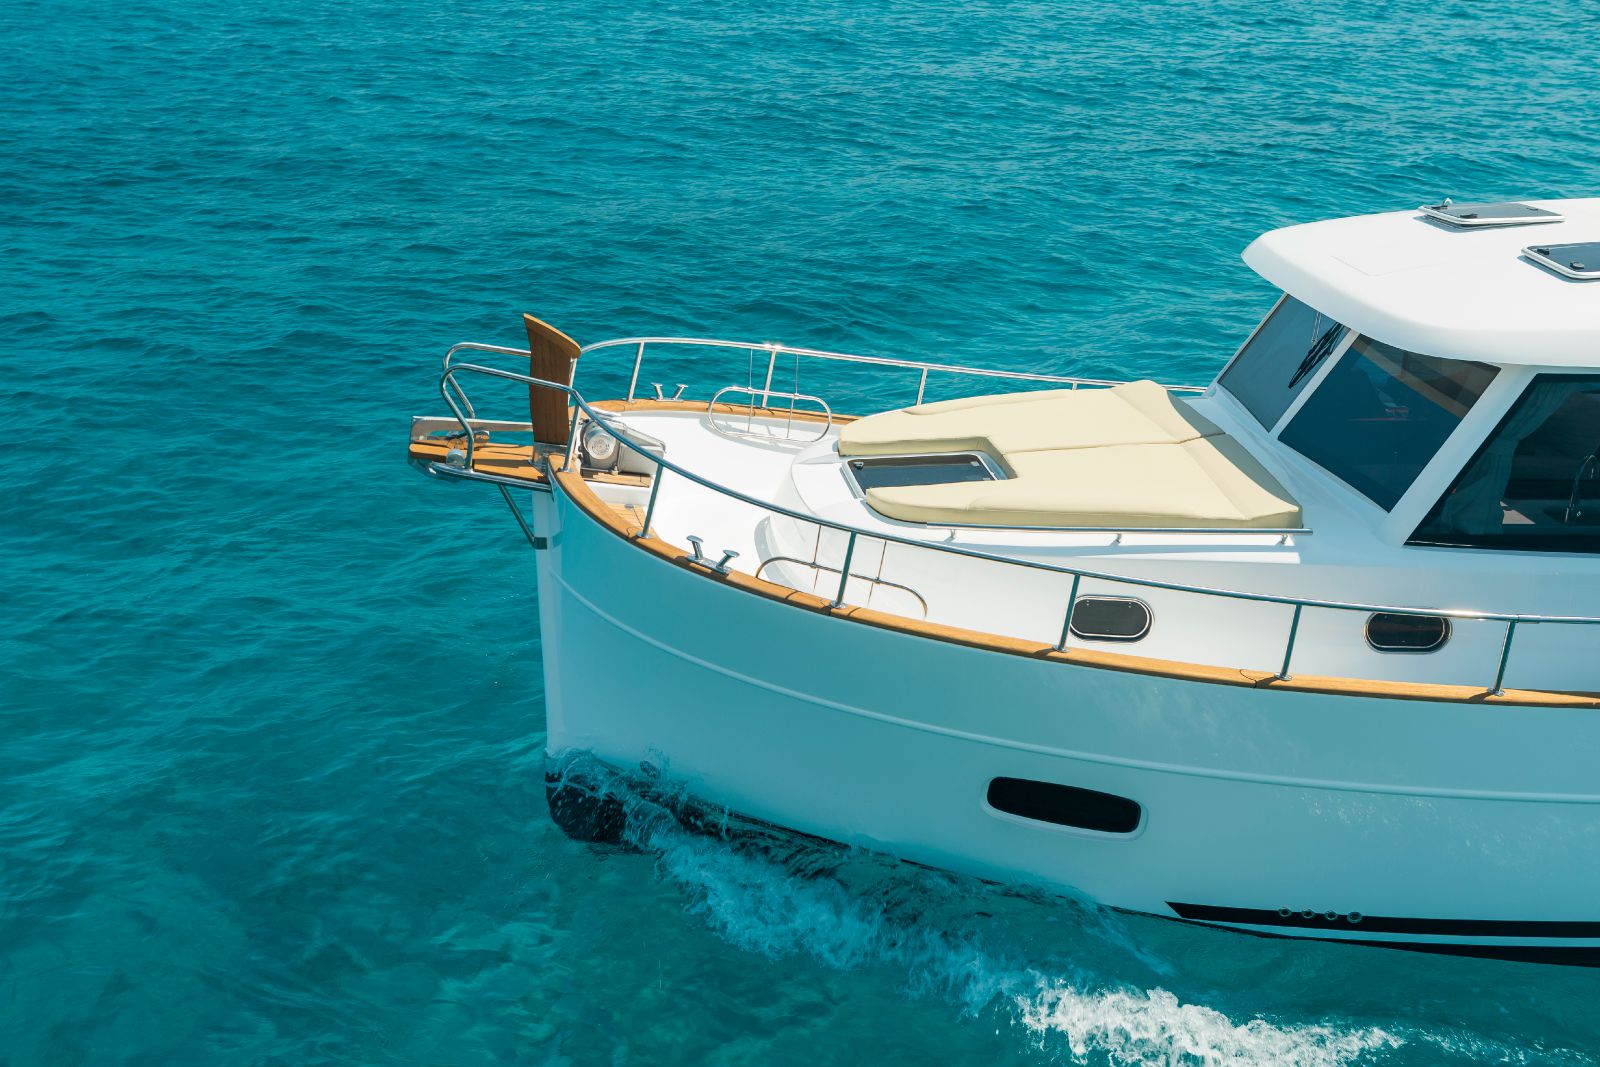 Minorca Islander 34 yacht for sale